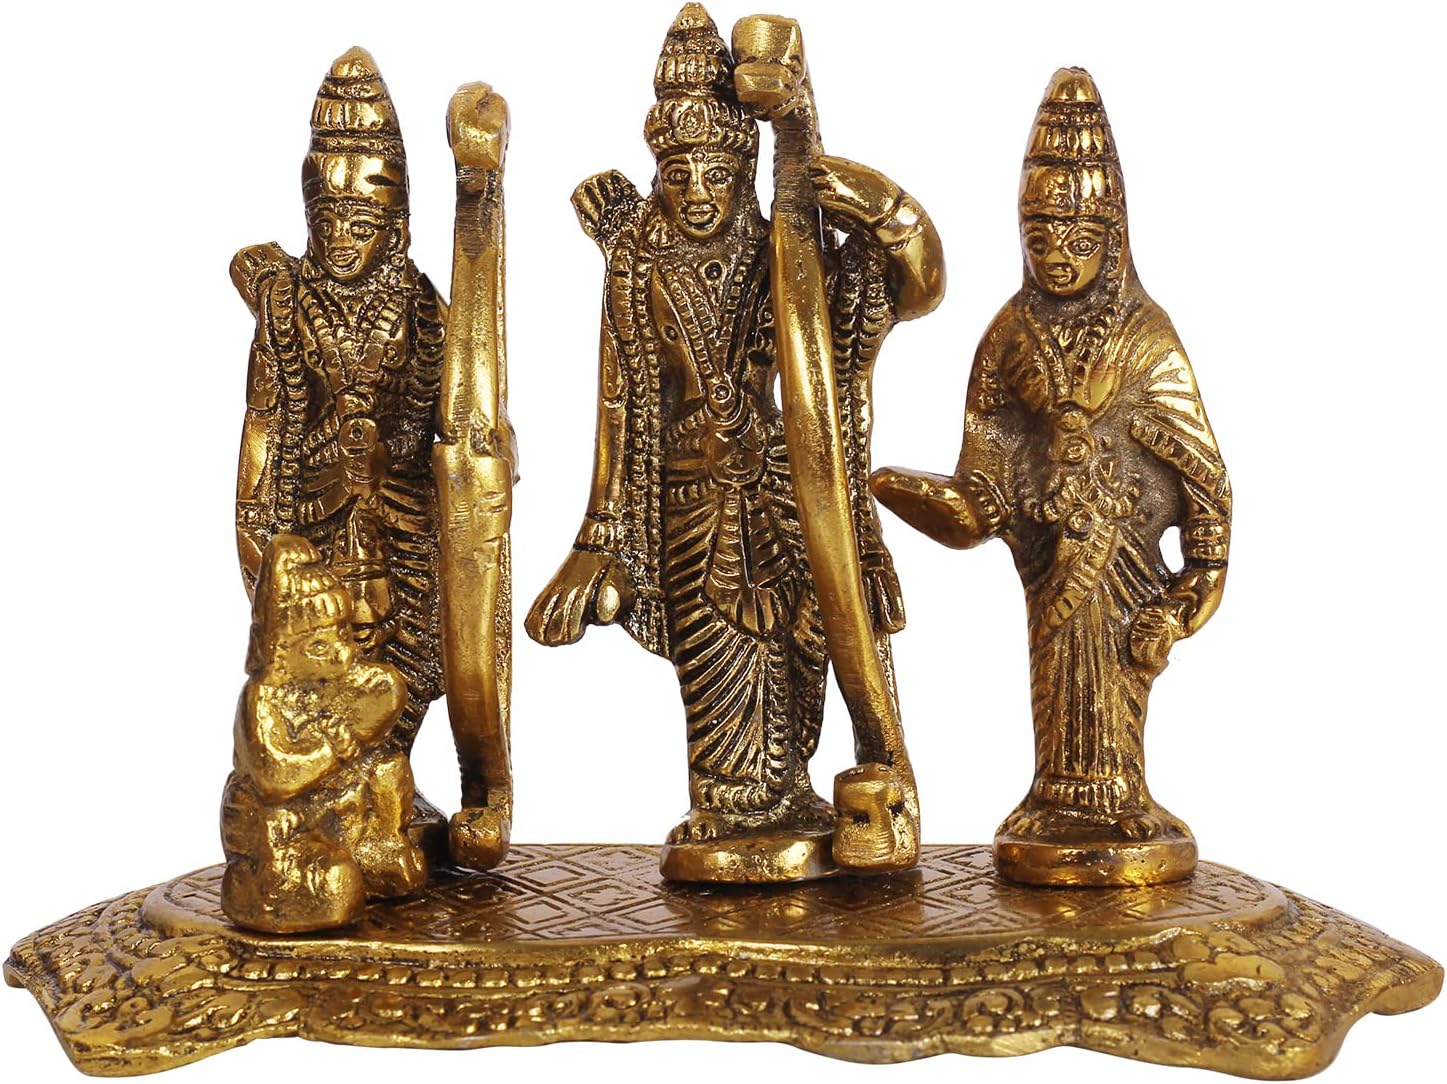 ETROVES 5 Inch Handmade Brass Idol Ram Darbar Statue Lord Rama Laxman Sita Religious Gift Indian God Pooja